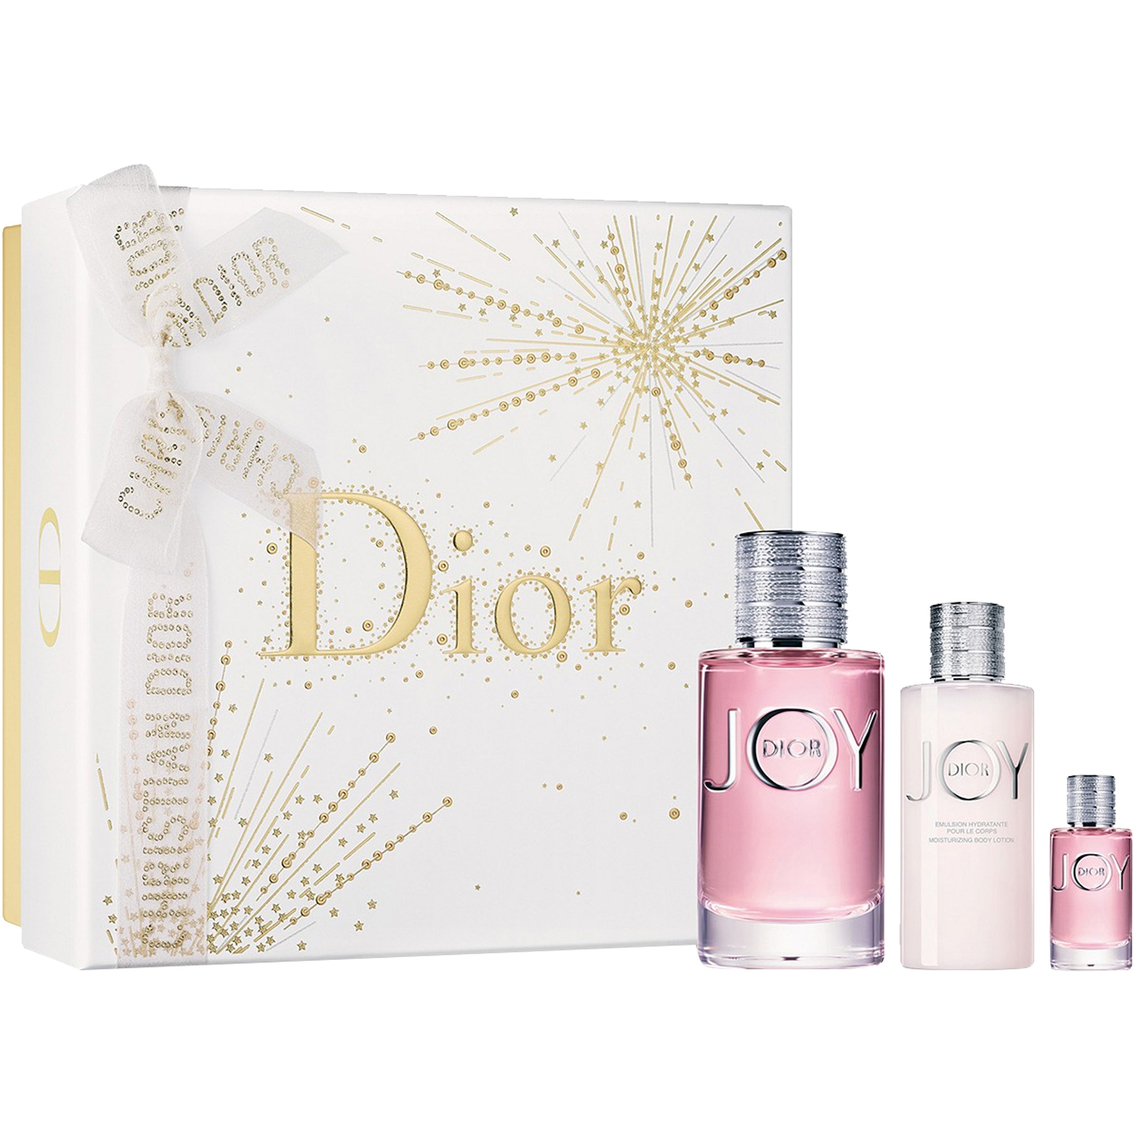 Dior Joy By Dior Gift Set | Gifts Sets 